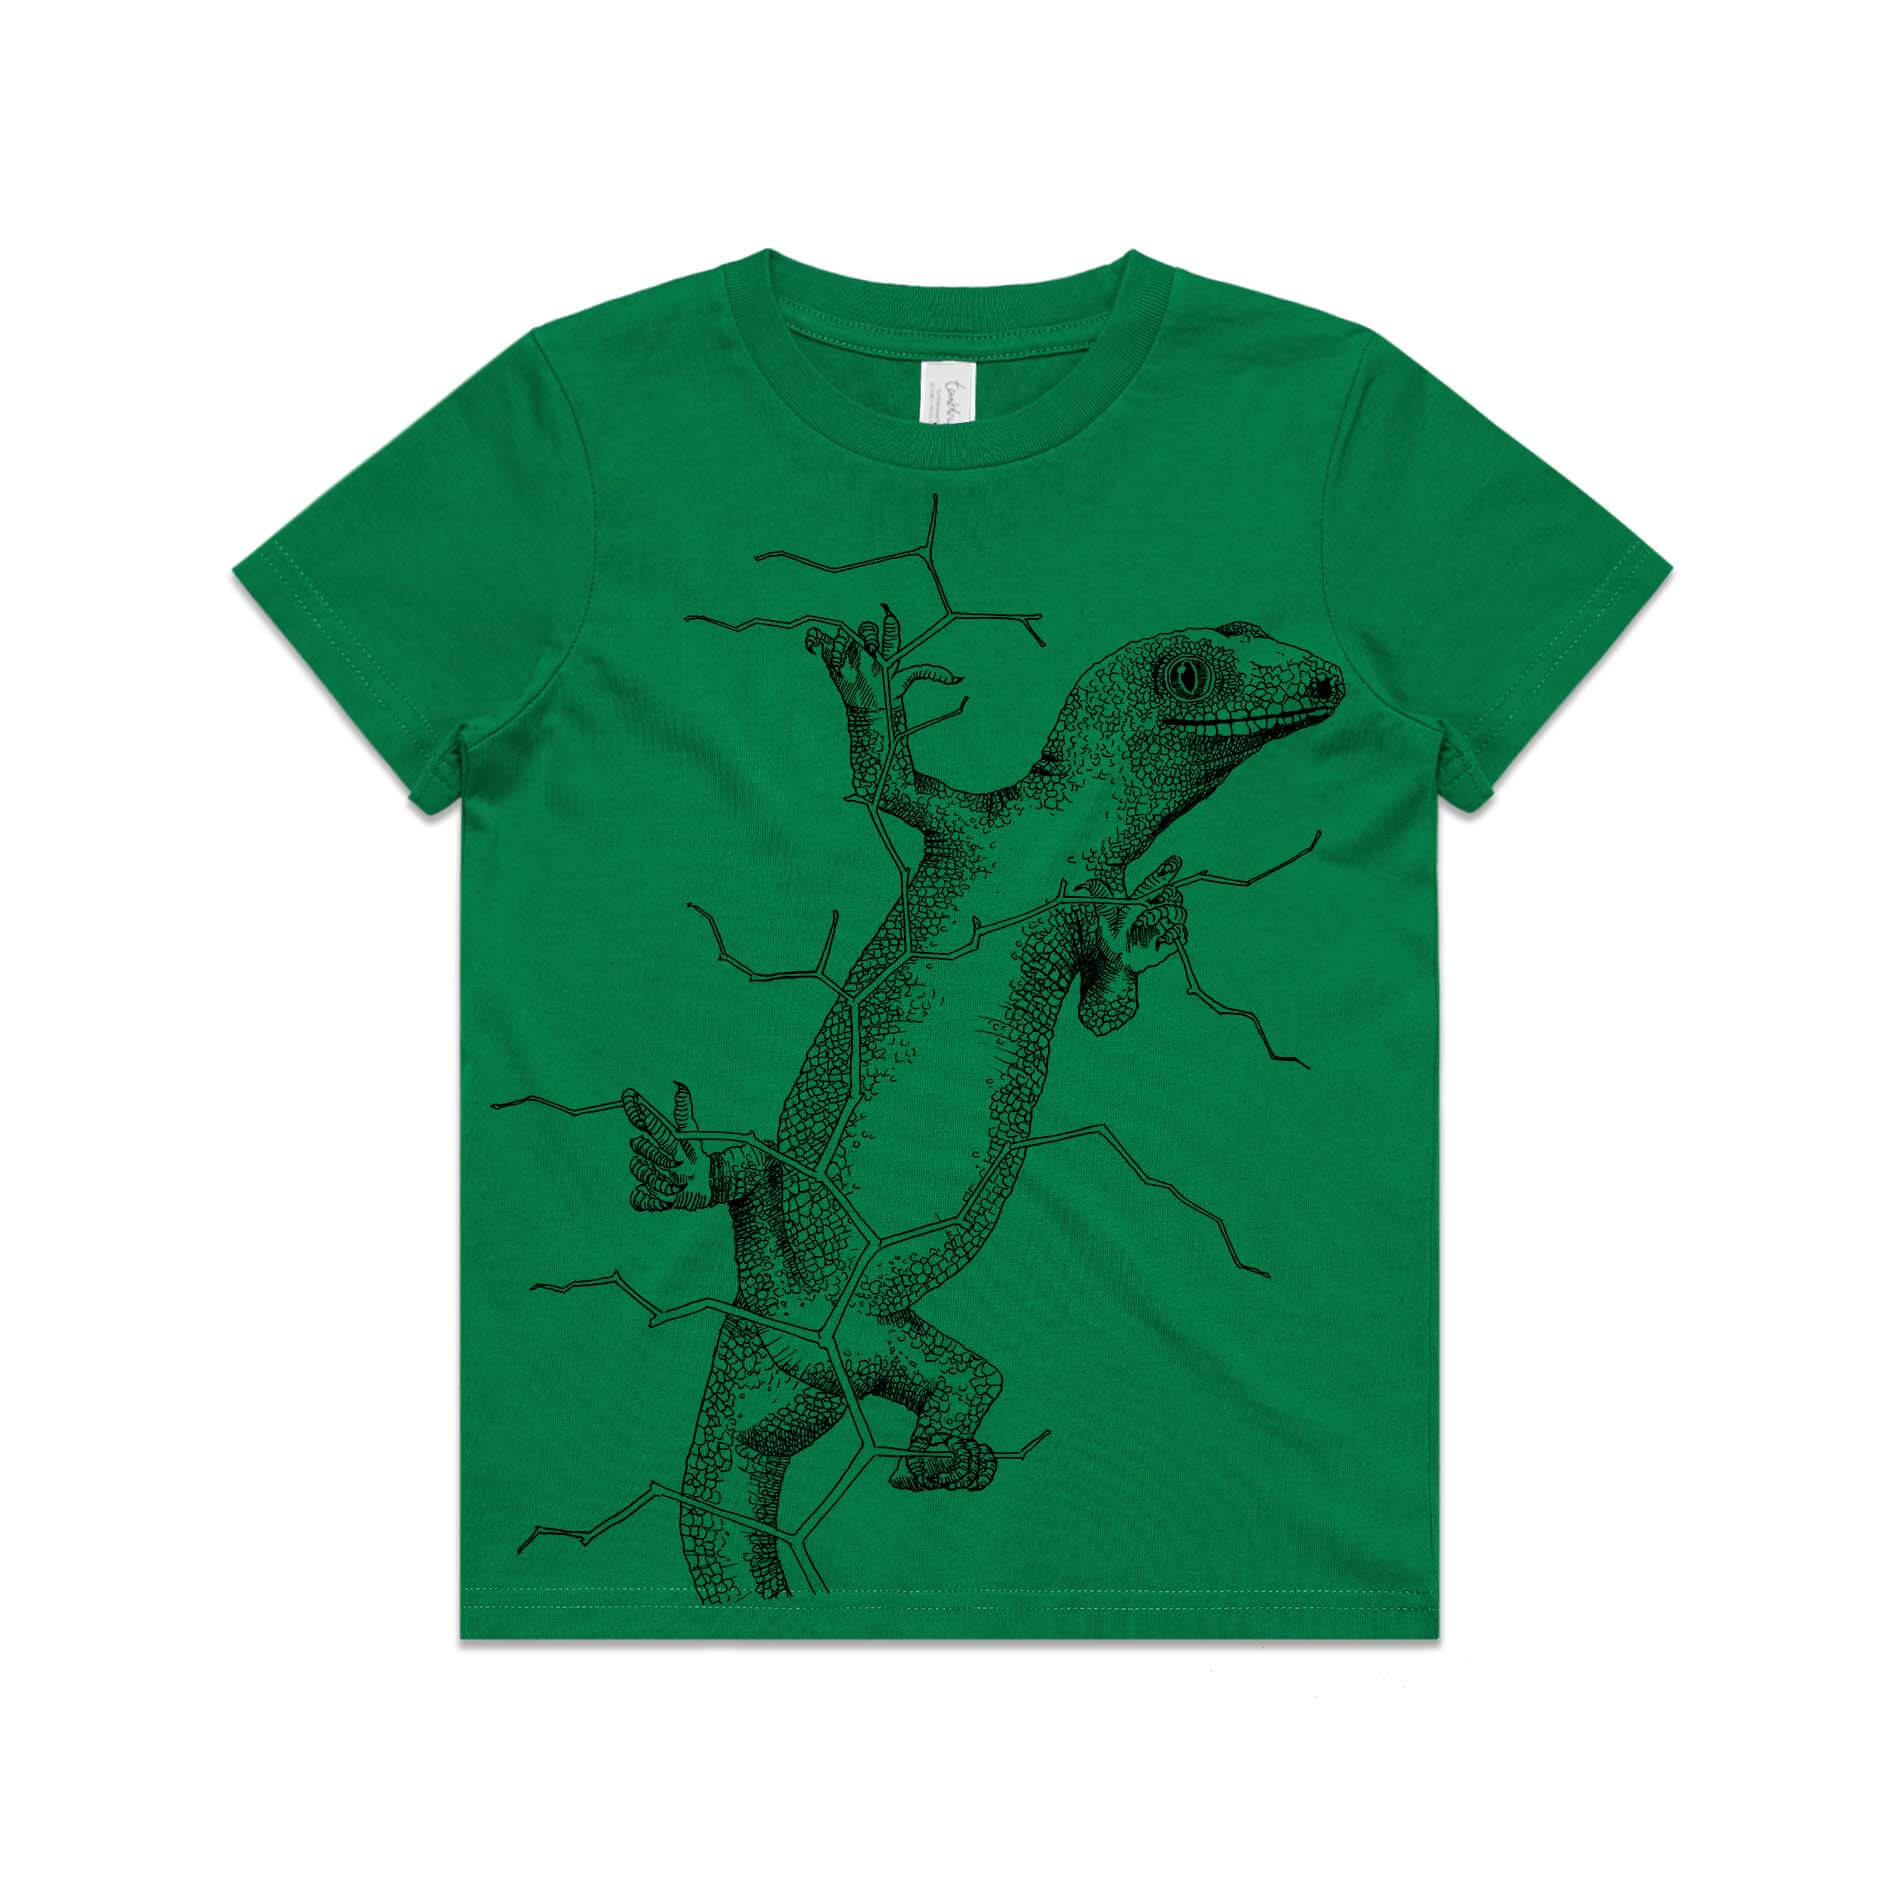 Green, cotton kids' t-shirt with screen printed gecko design.